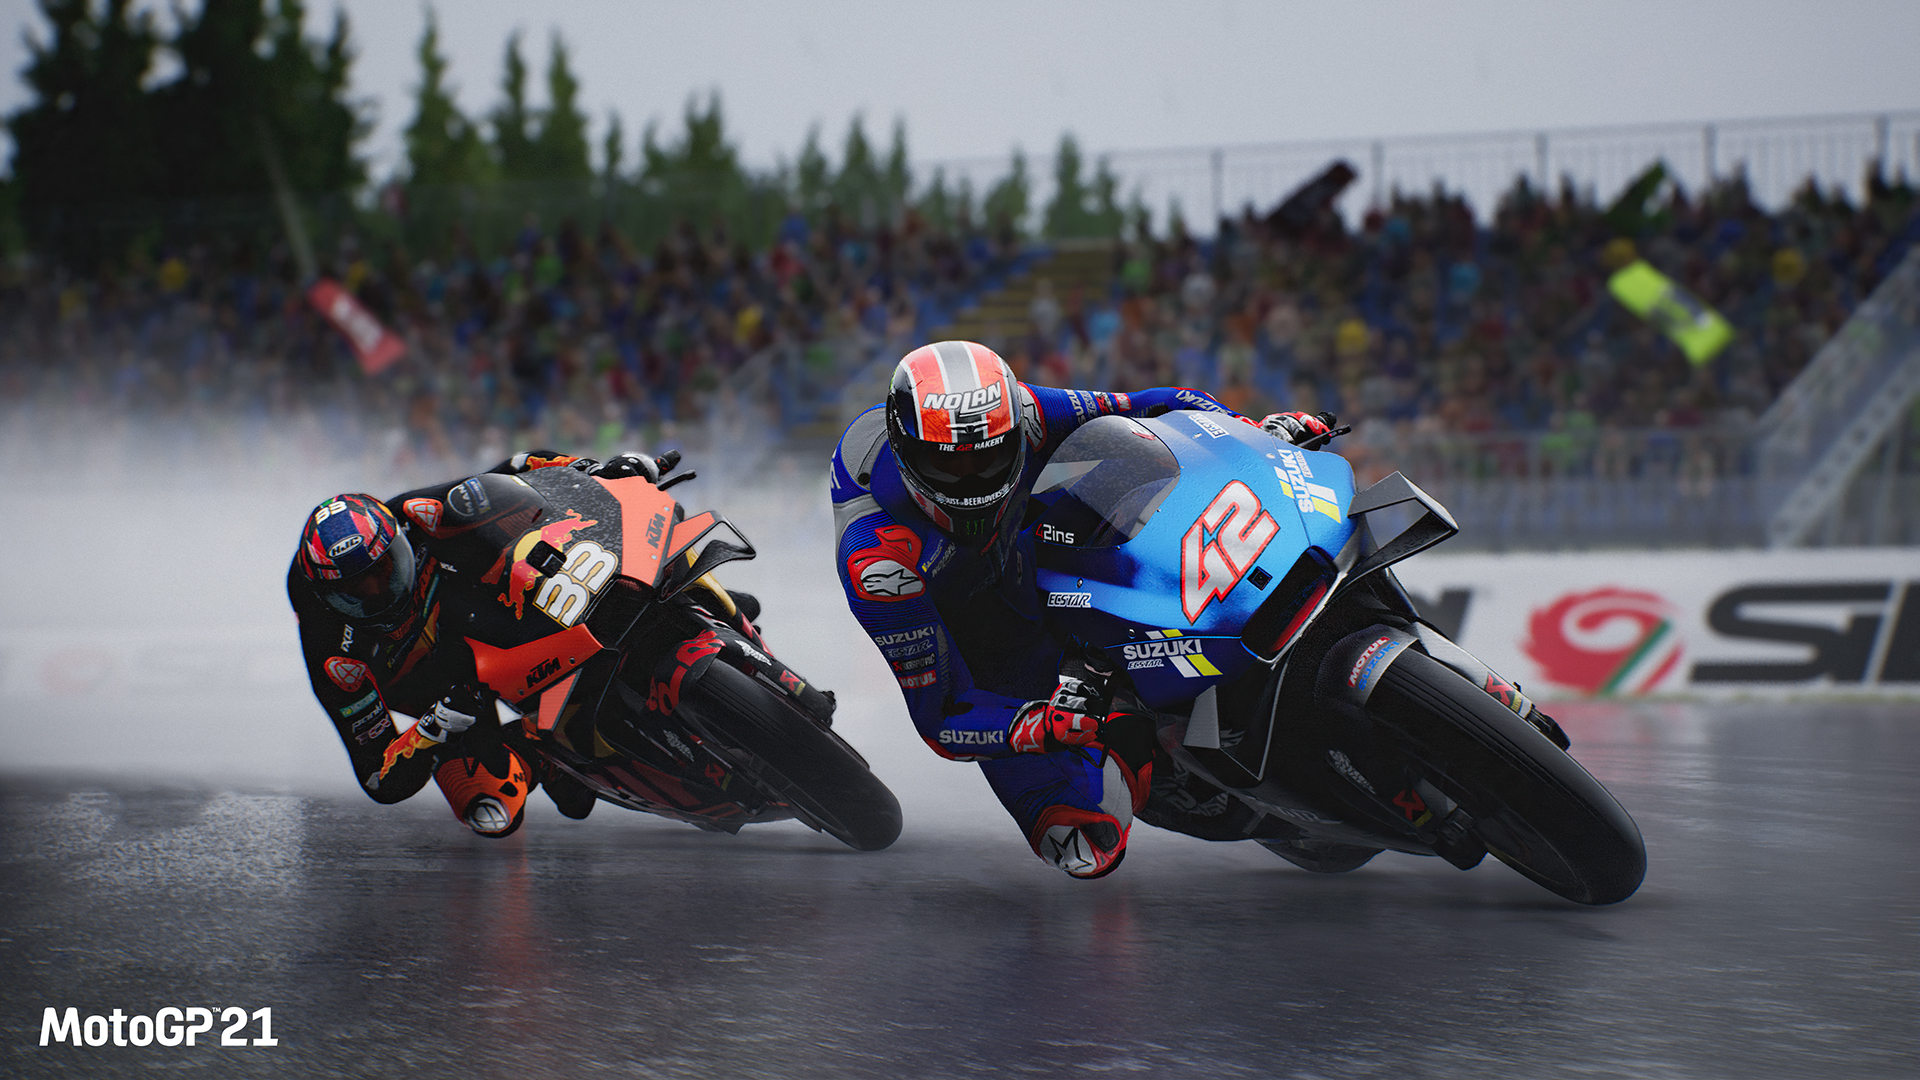 MotoGP 21 Releases on April 22 - Trailer, Screenshots & Details